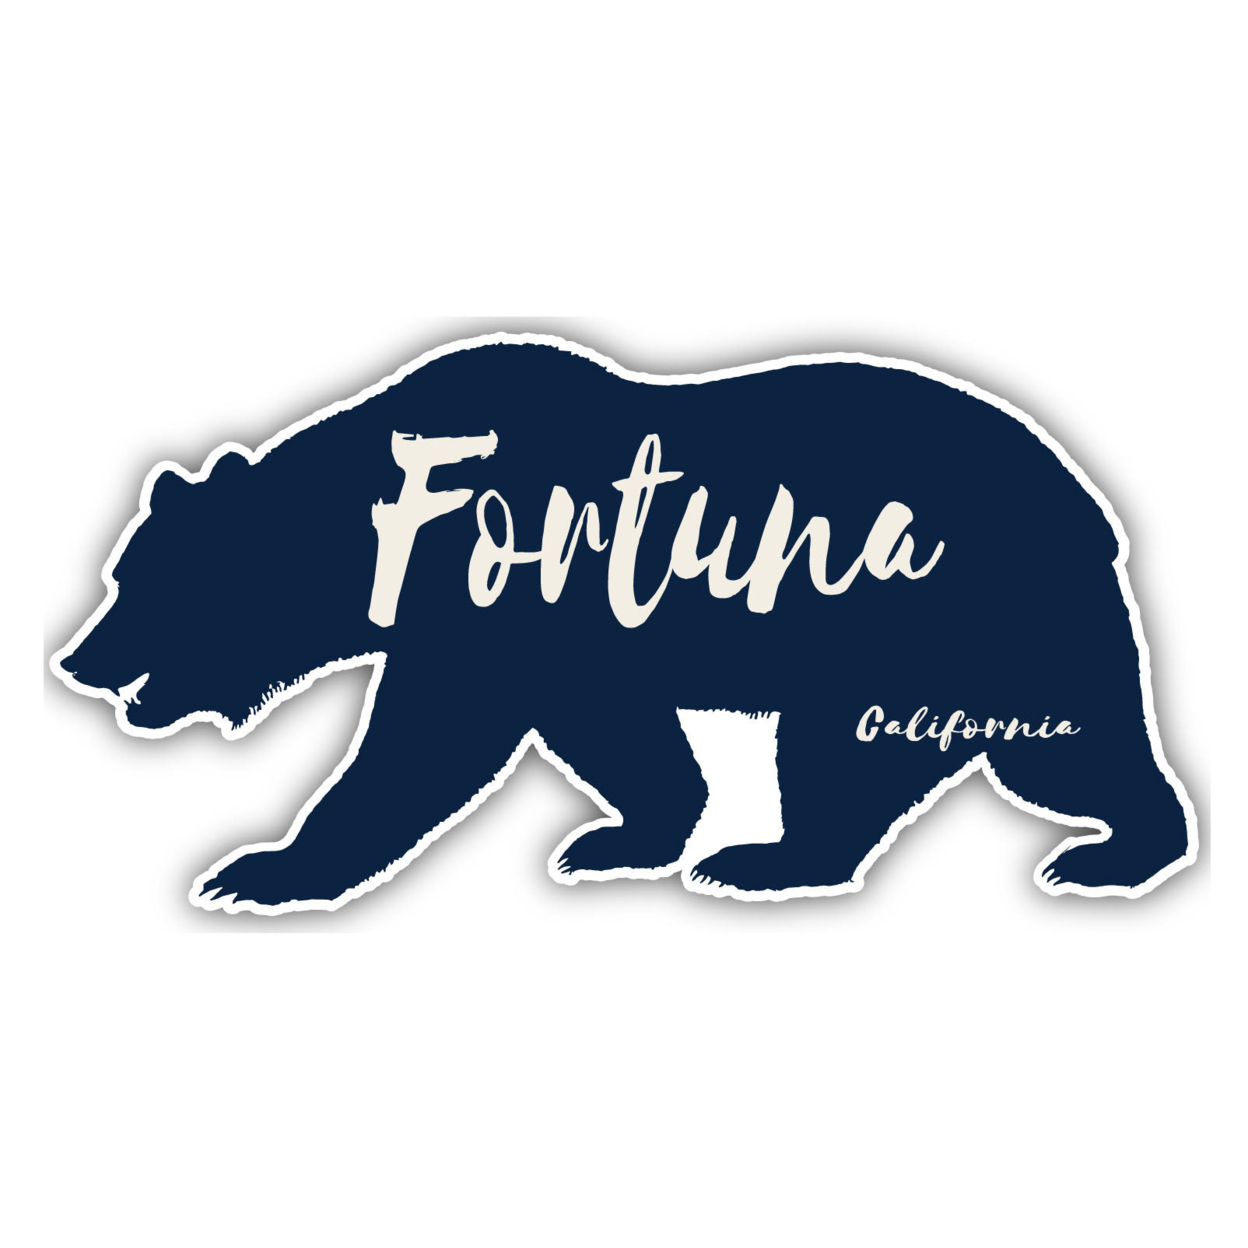 Fortuna California Souvenir Decorative Stickers (Choose Theme And Size) - Single Unit, 6-Inch, Camp Life